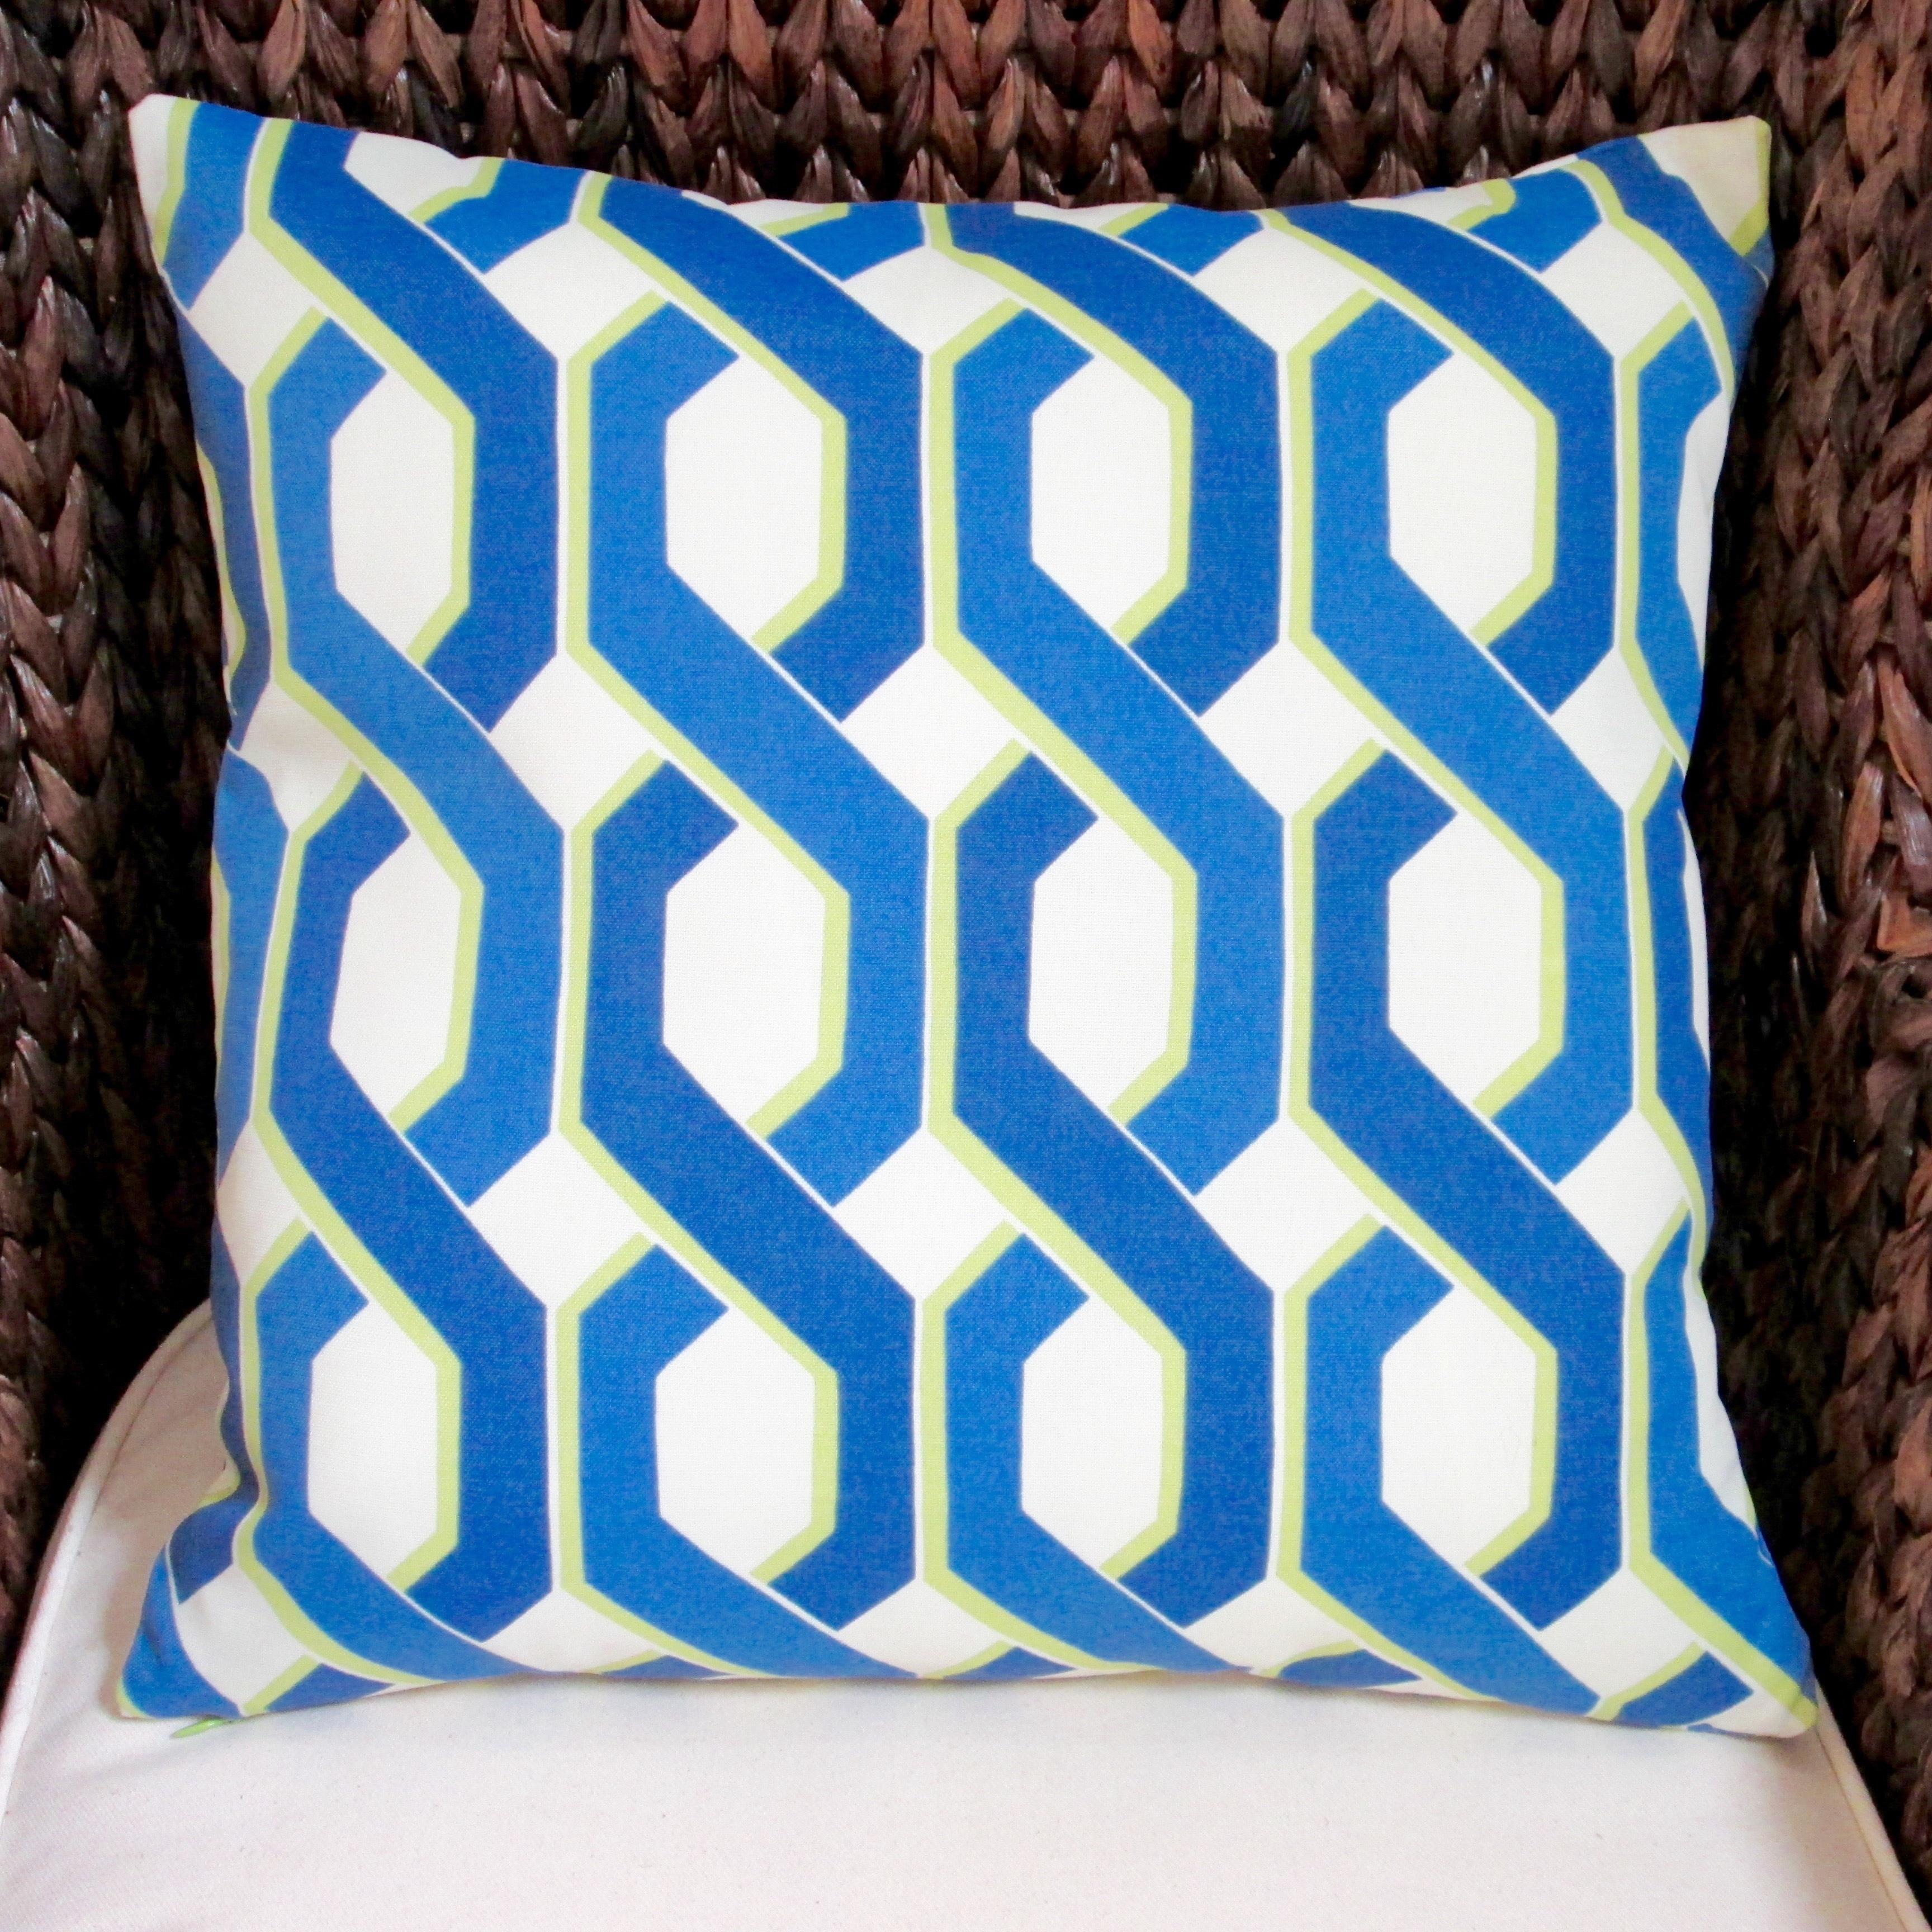 https://ak1.ostkcdn.com/images/products/10353504/Artisan-Pillows-Indoor-Outdoor-18-inch-Blue-and-Green-Modern-Geometric-Throw-Pillow-Set-of-2-b240082d-9378-43d4-bd1f-8bc98b06e69f.jpg